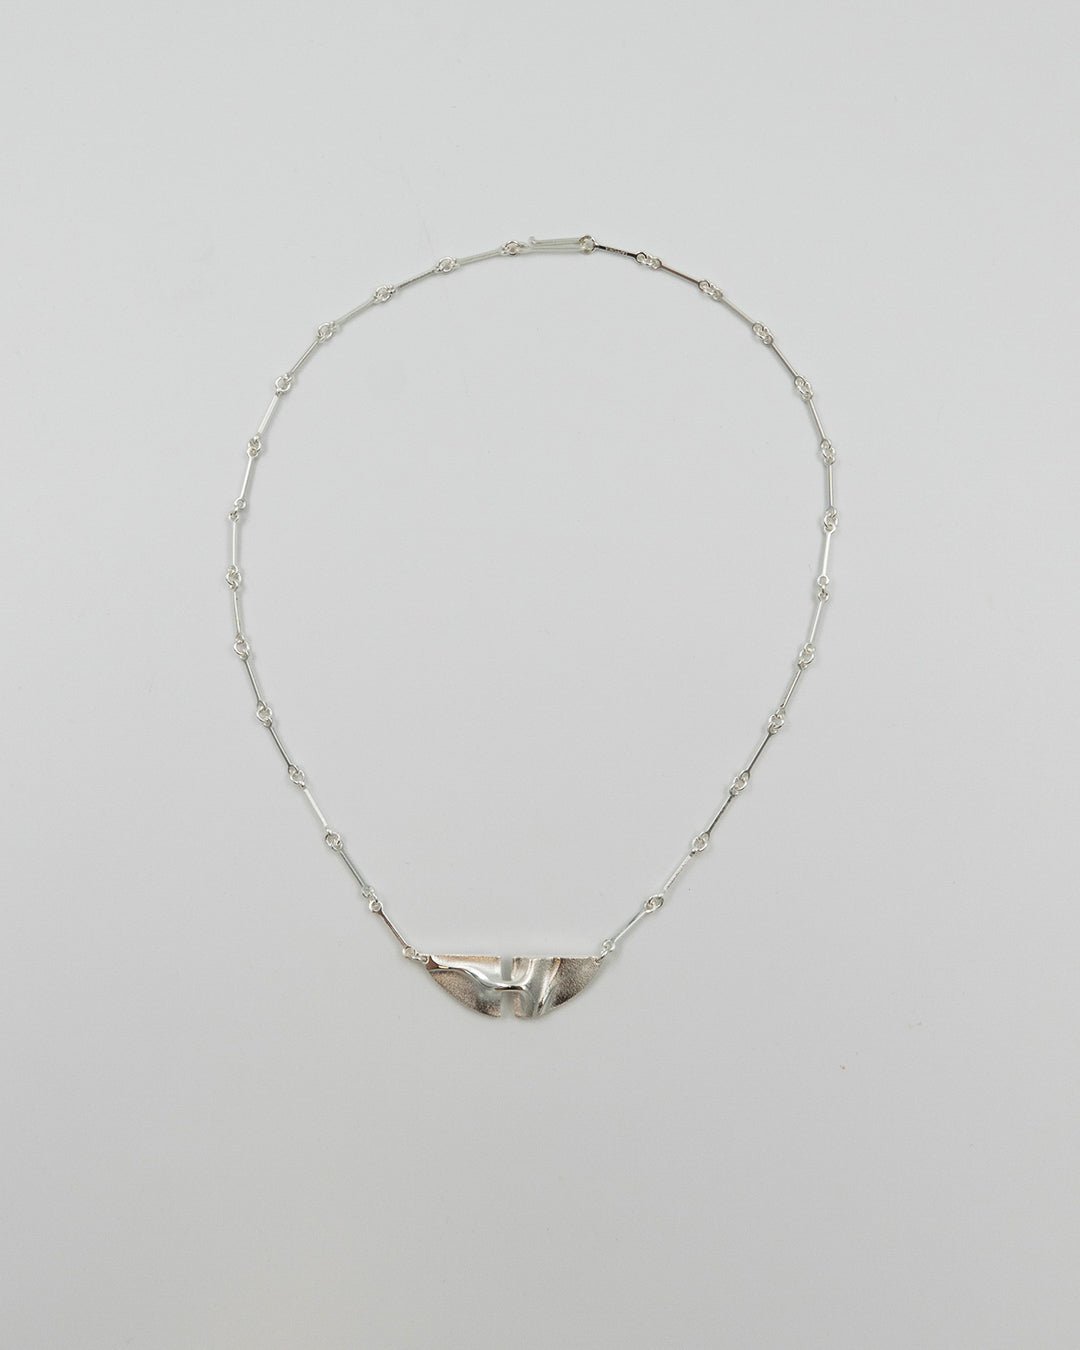 Kept Viracocha necklace 48 cm silver